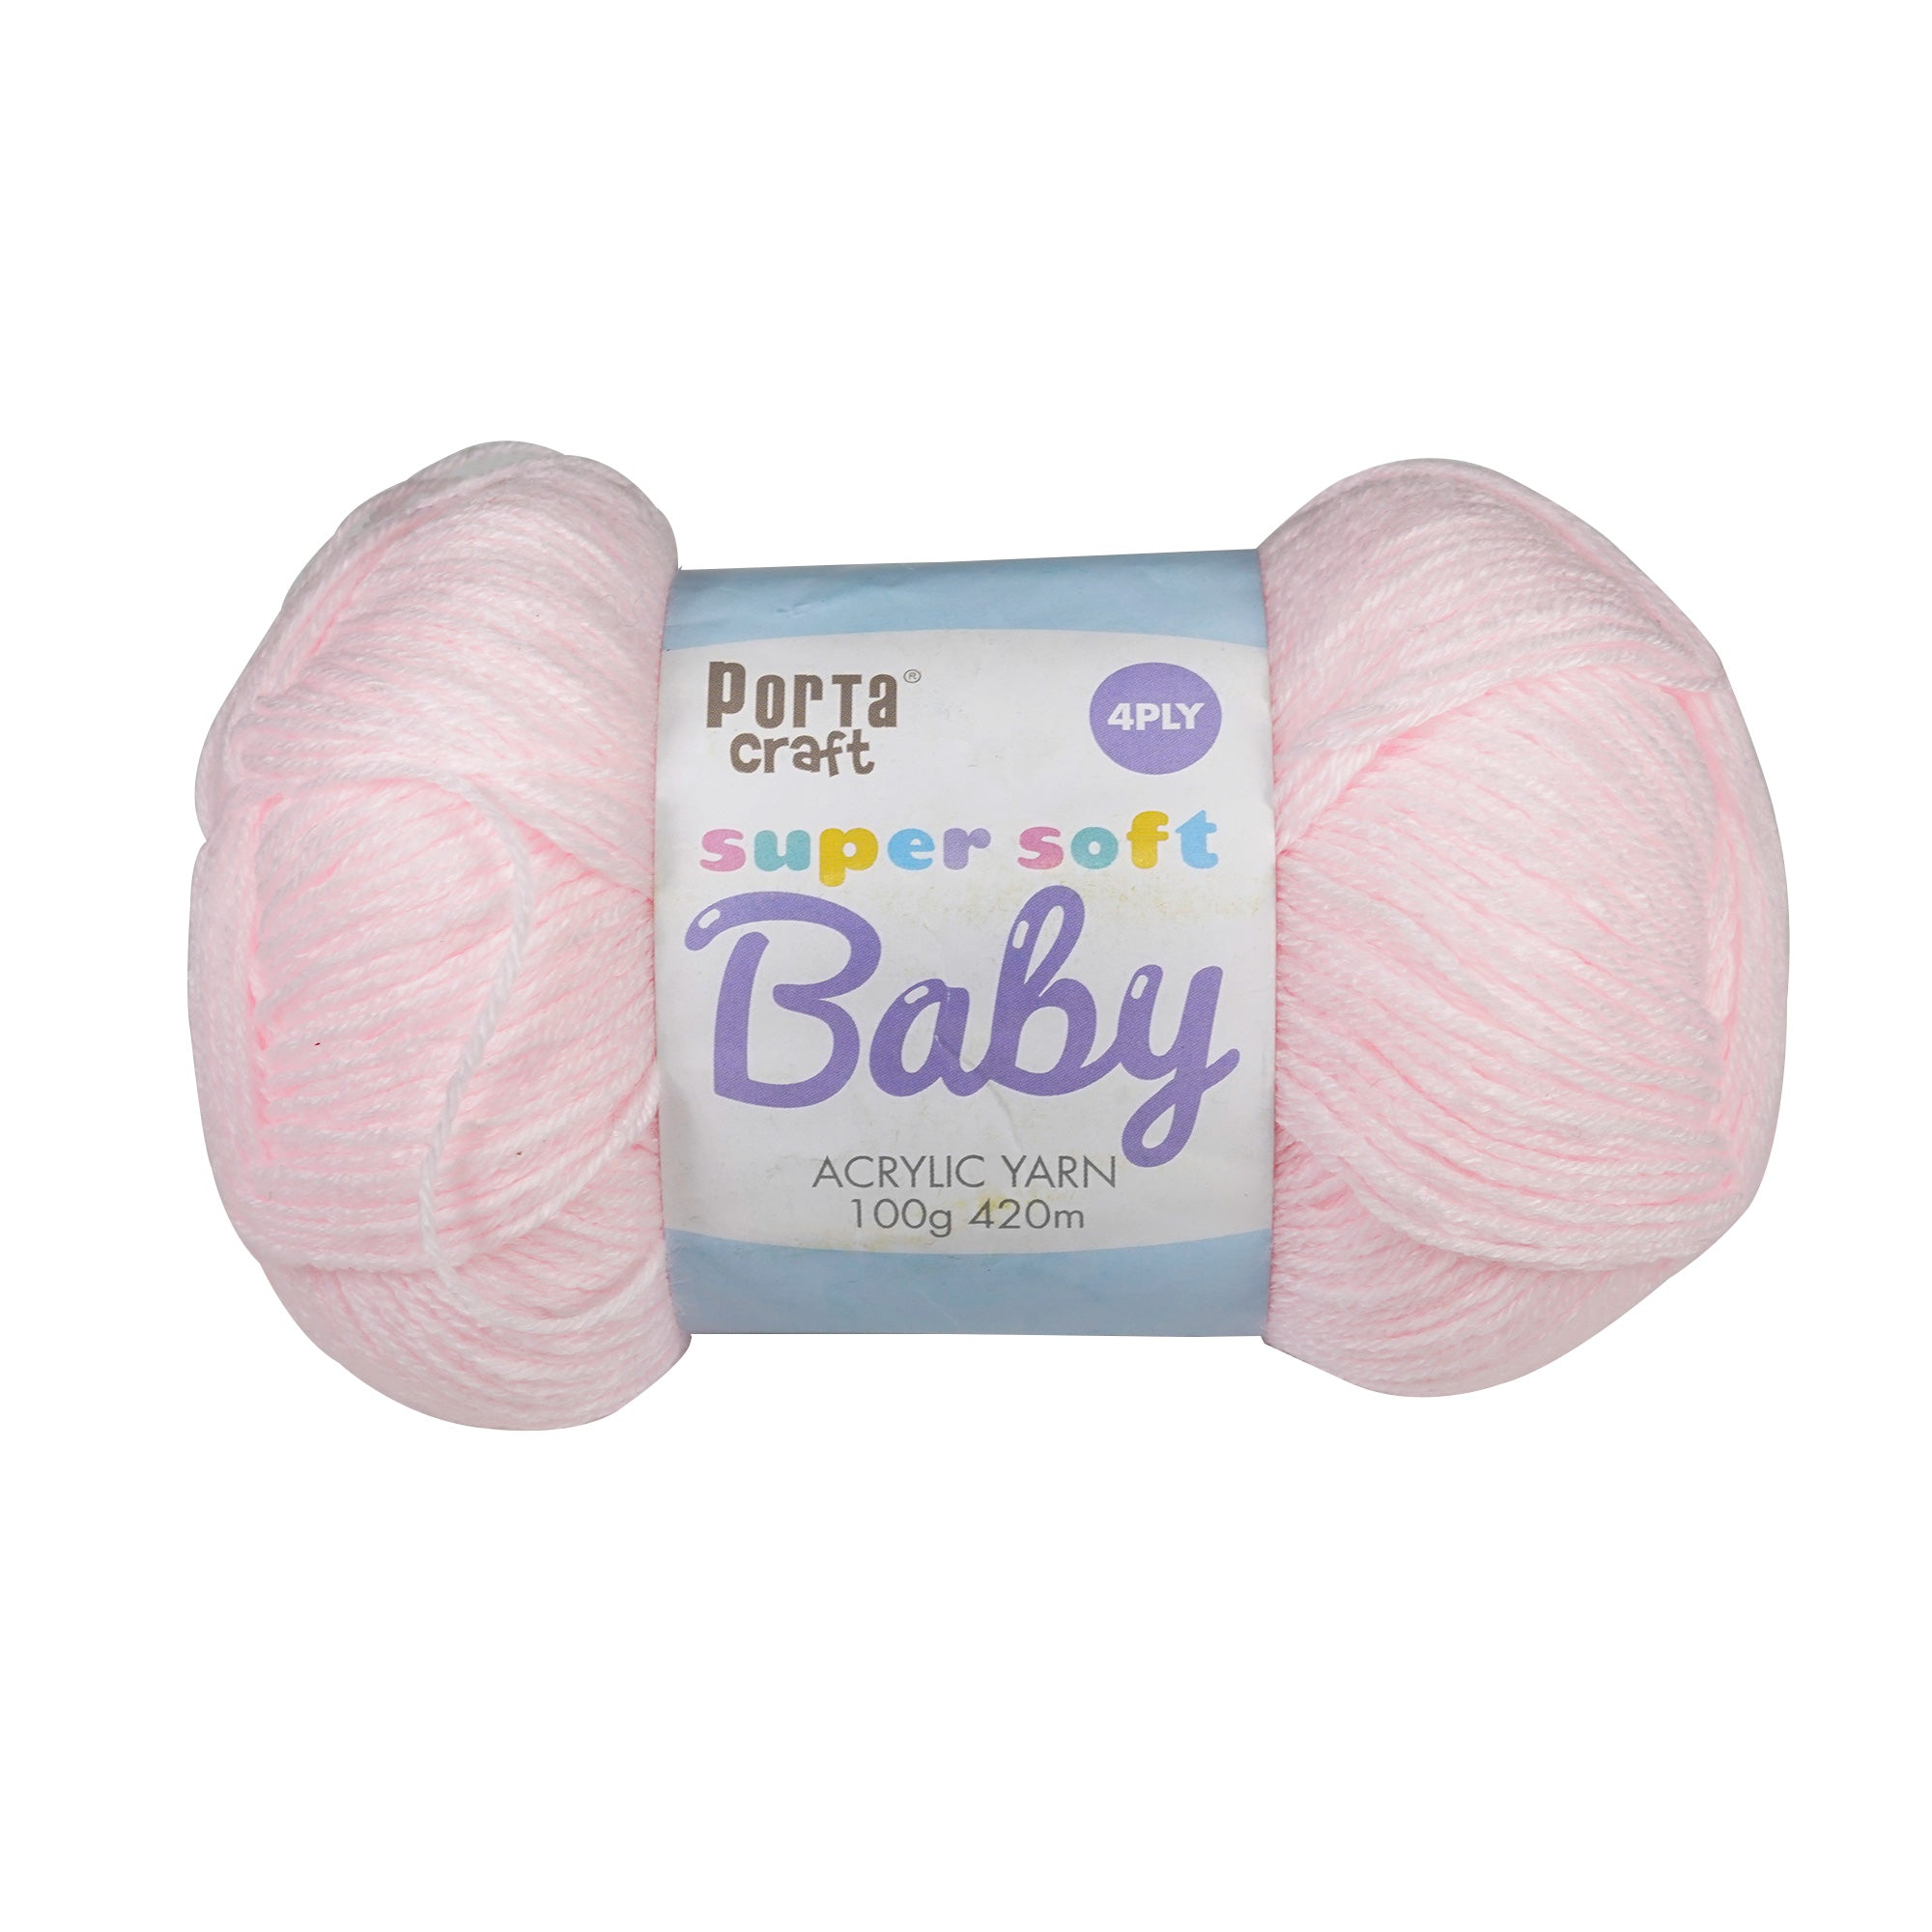 Porta Craft Super Soft Baby Acrylic Yarn 100% 100Gm 420M 4Ply Baby Pink